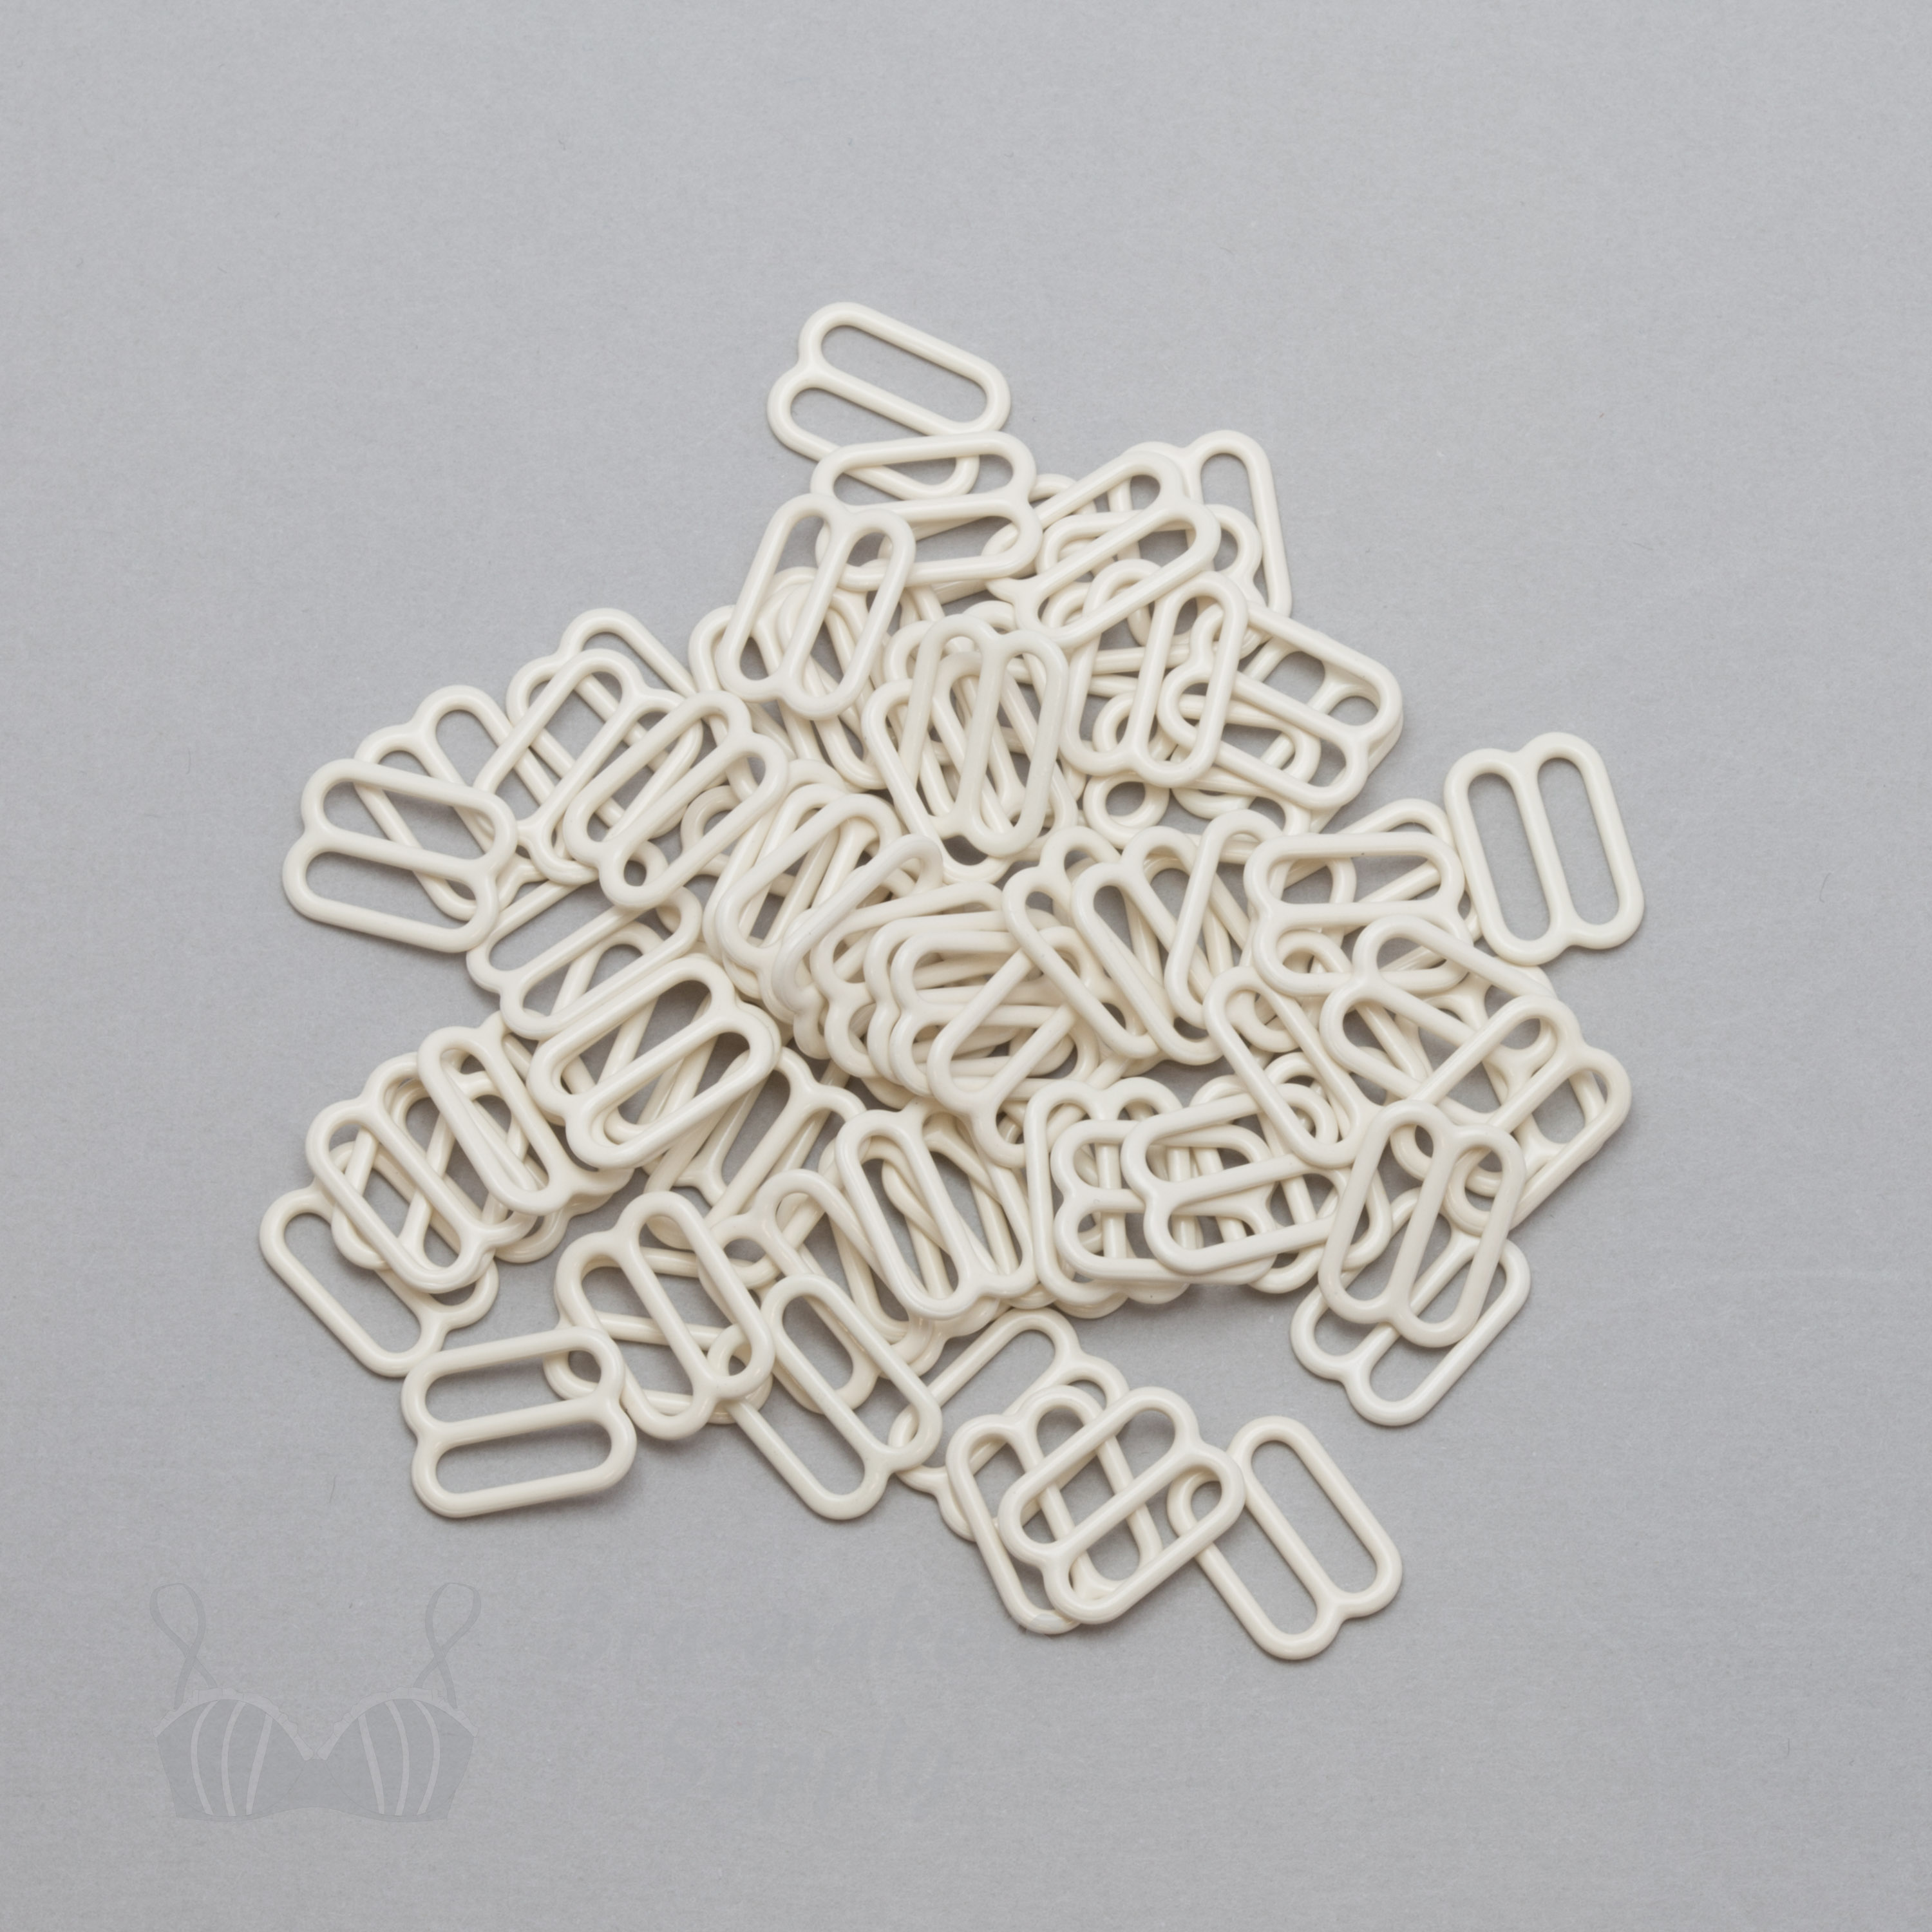 half inch 12mm RM-400 S ivory nylon coated metal rings sliders or winter white Pantone 11-0507 from Bra-Makers Supply 100 sliders shown